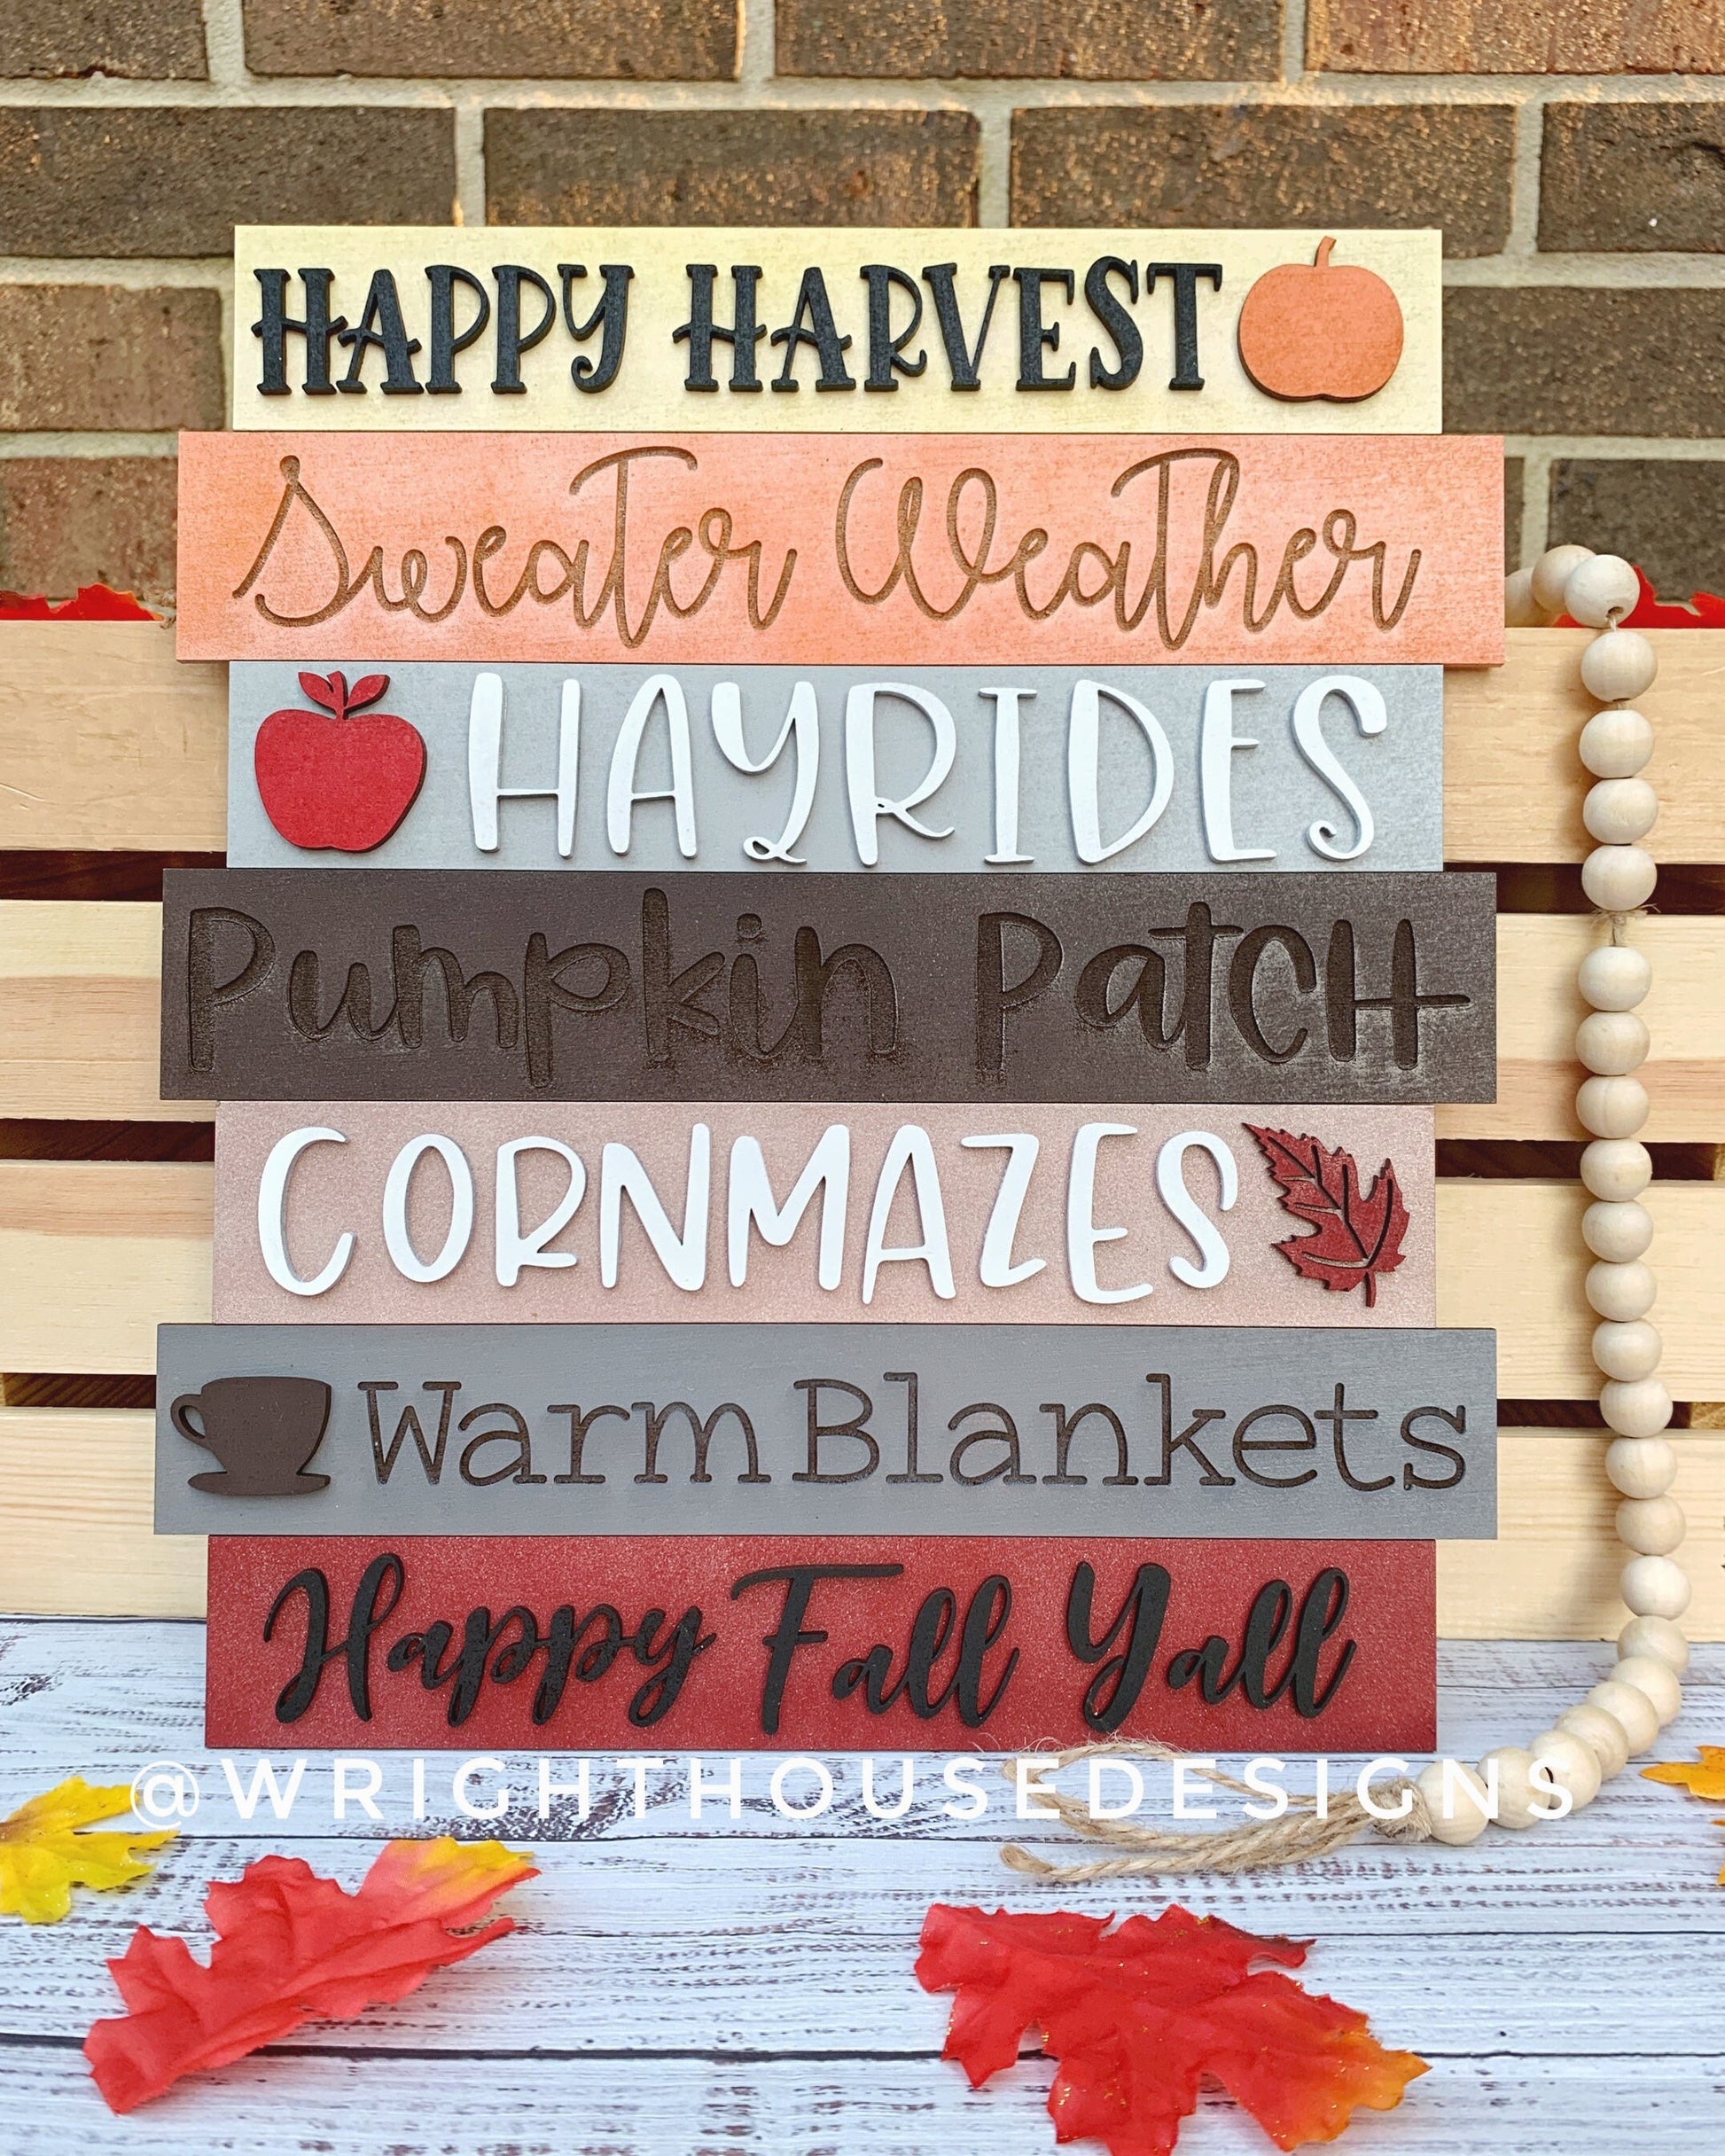 DIGITAL FILE - Fall Yall - Happy Harvest - Autumn Bucket List Stacked Sign Bundle - Seasonal Fall Decorations - SVG For Glowforge